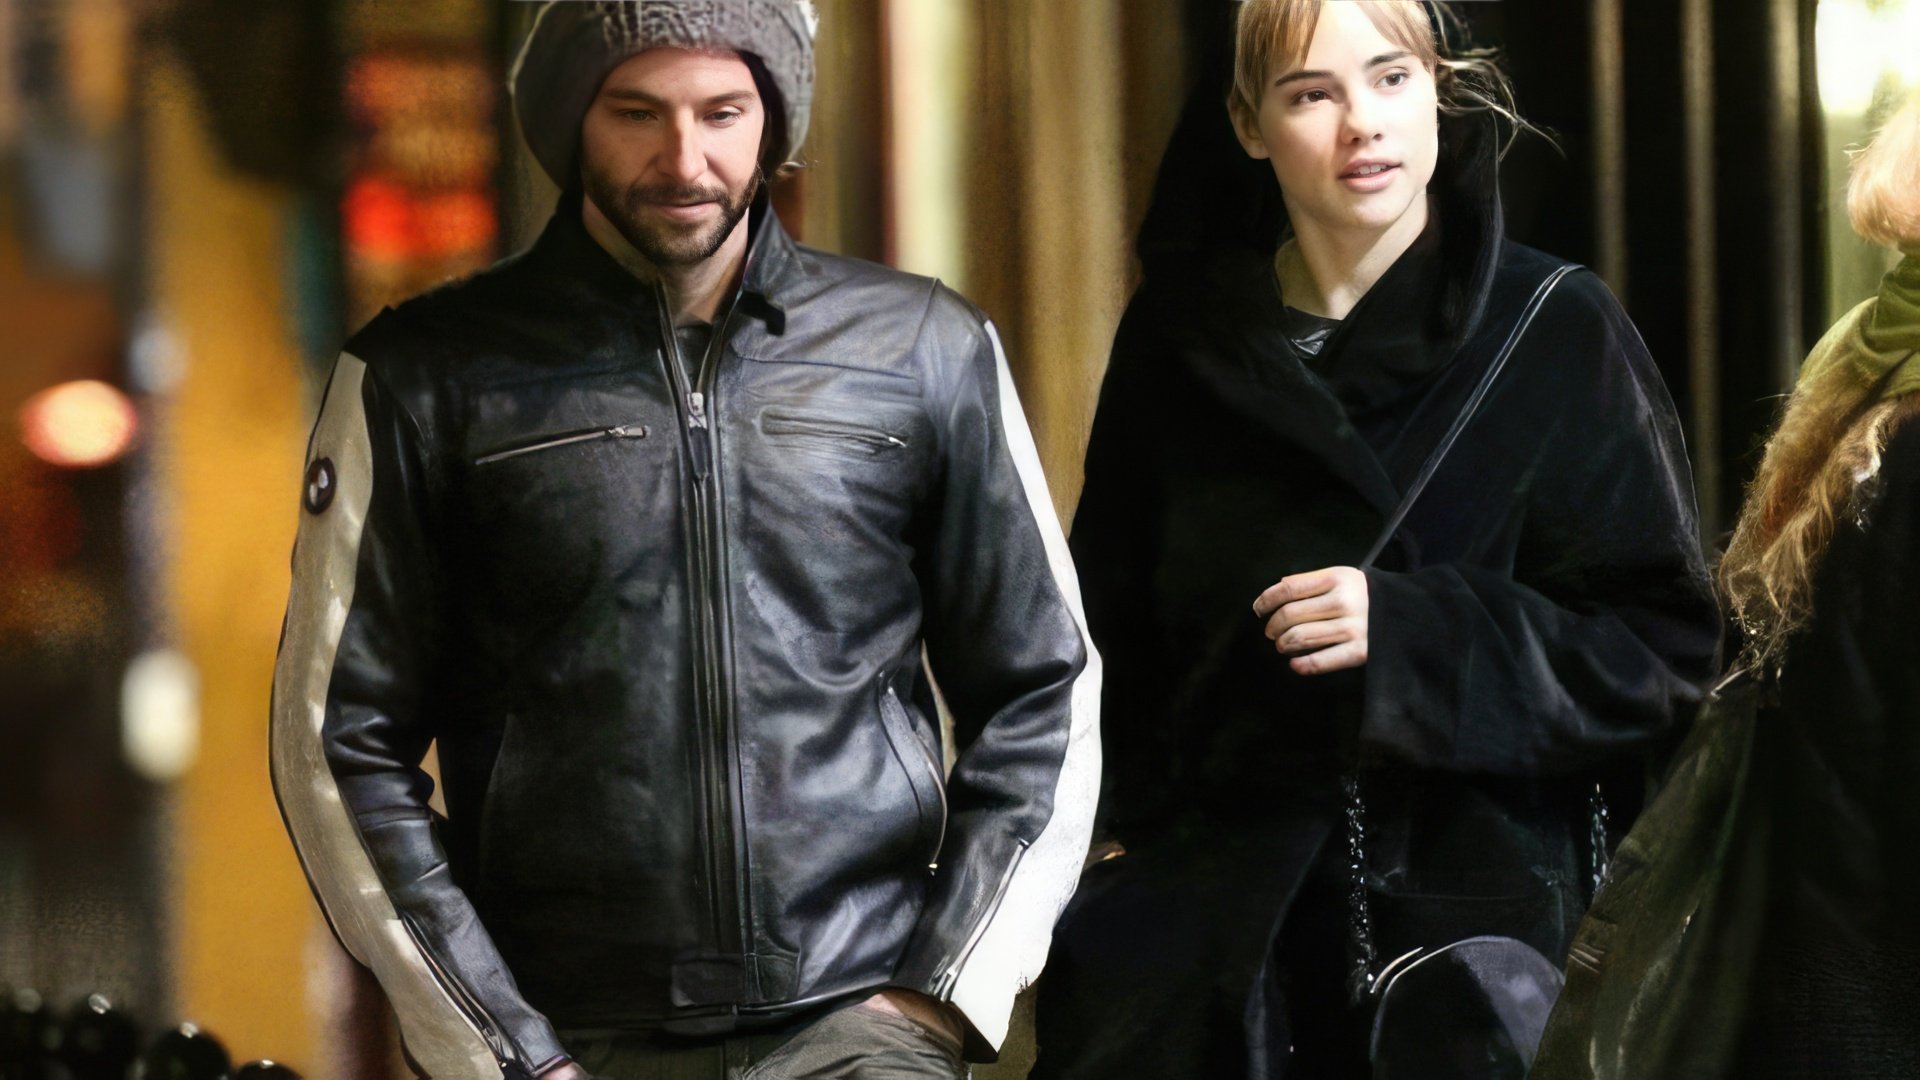 Bradley Cooper and Suki Waterhouse split over Renée Zellweger